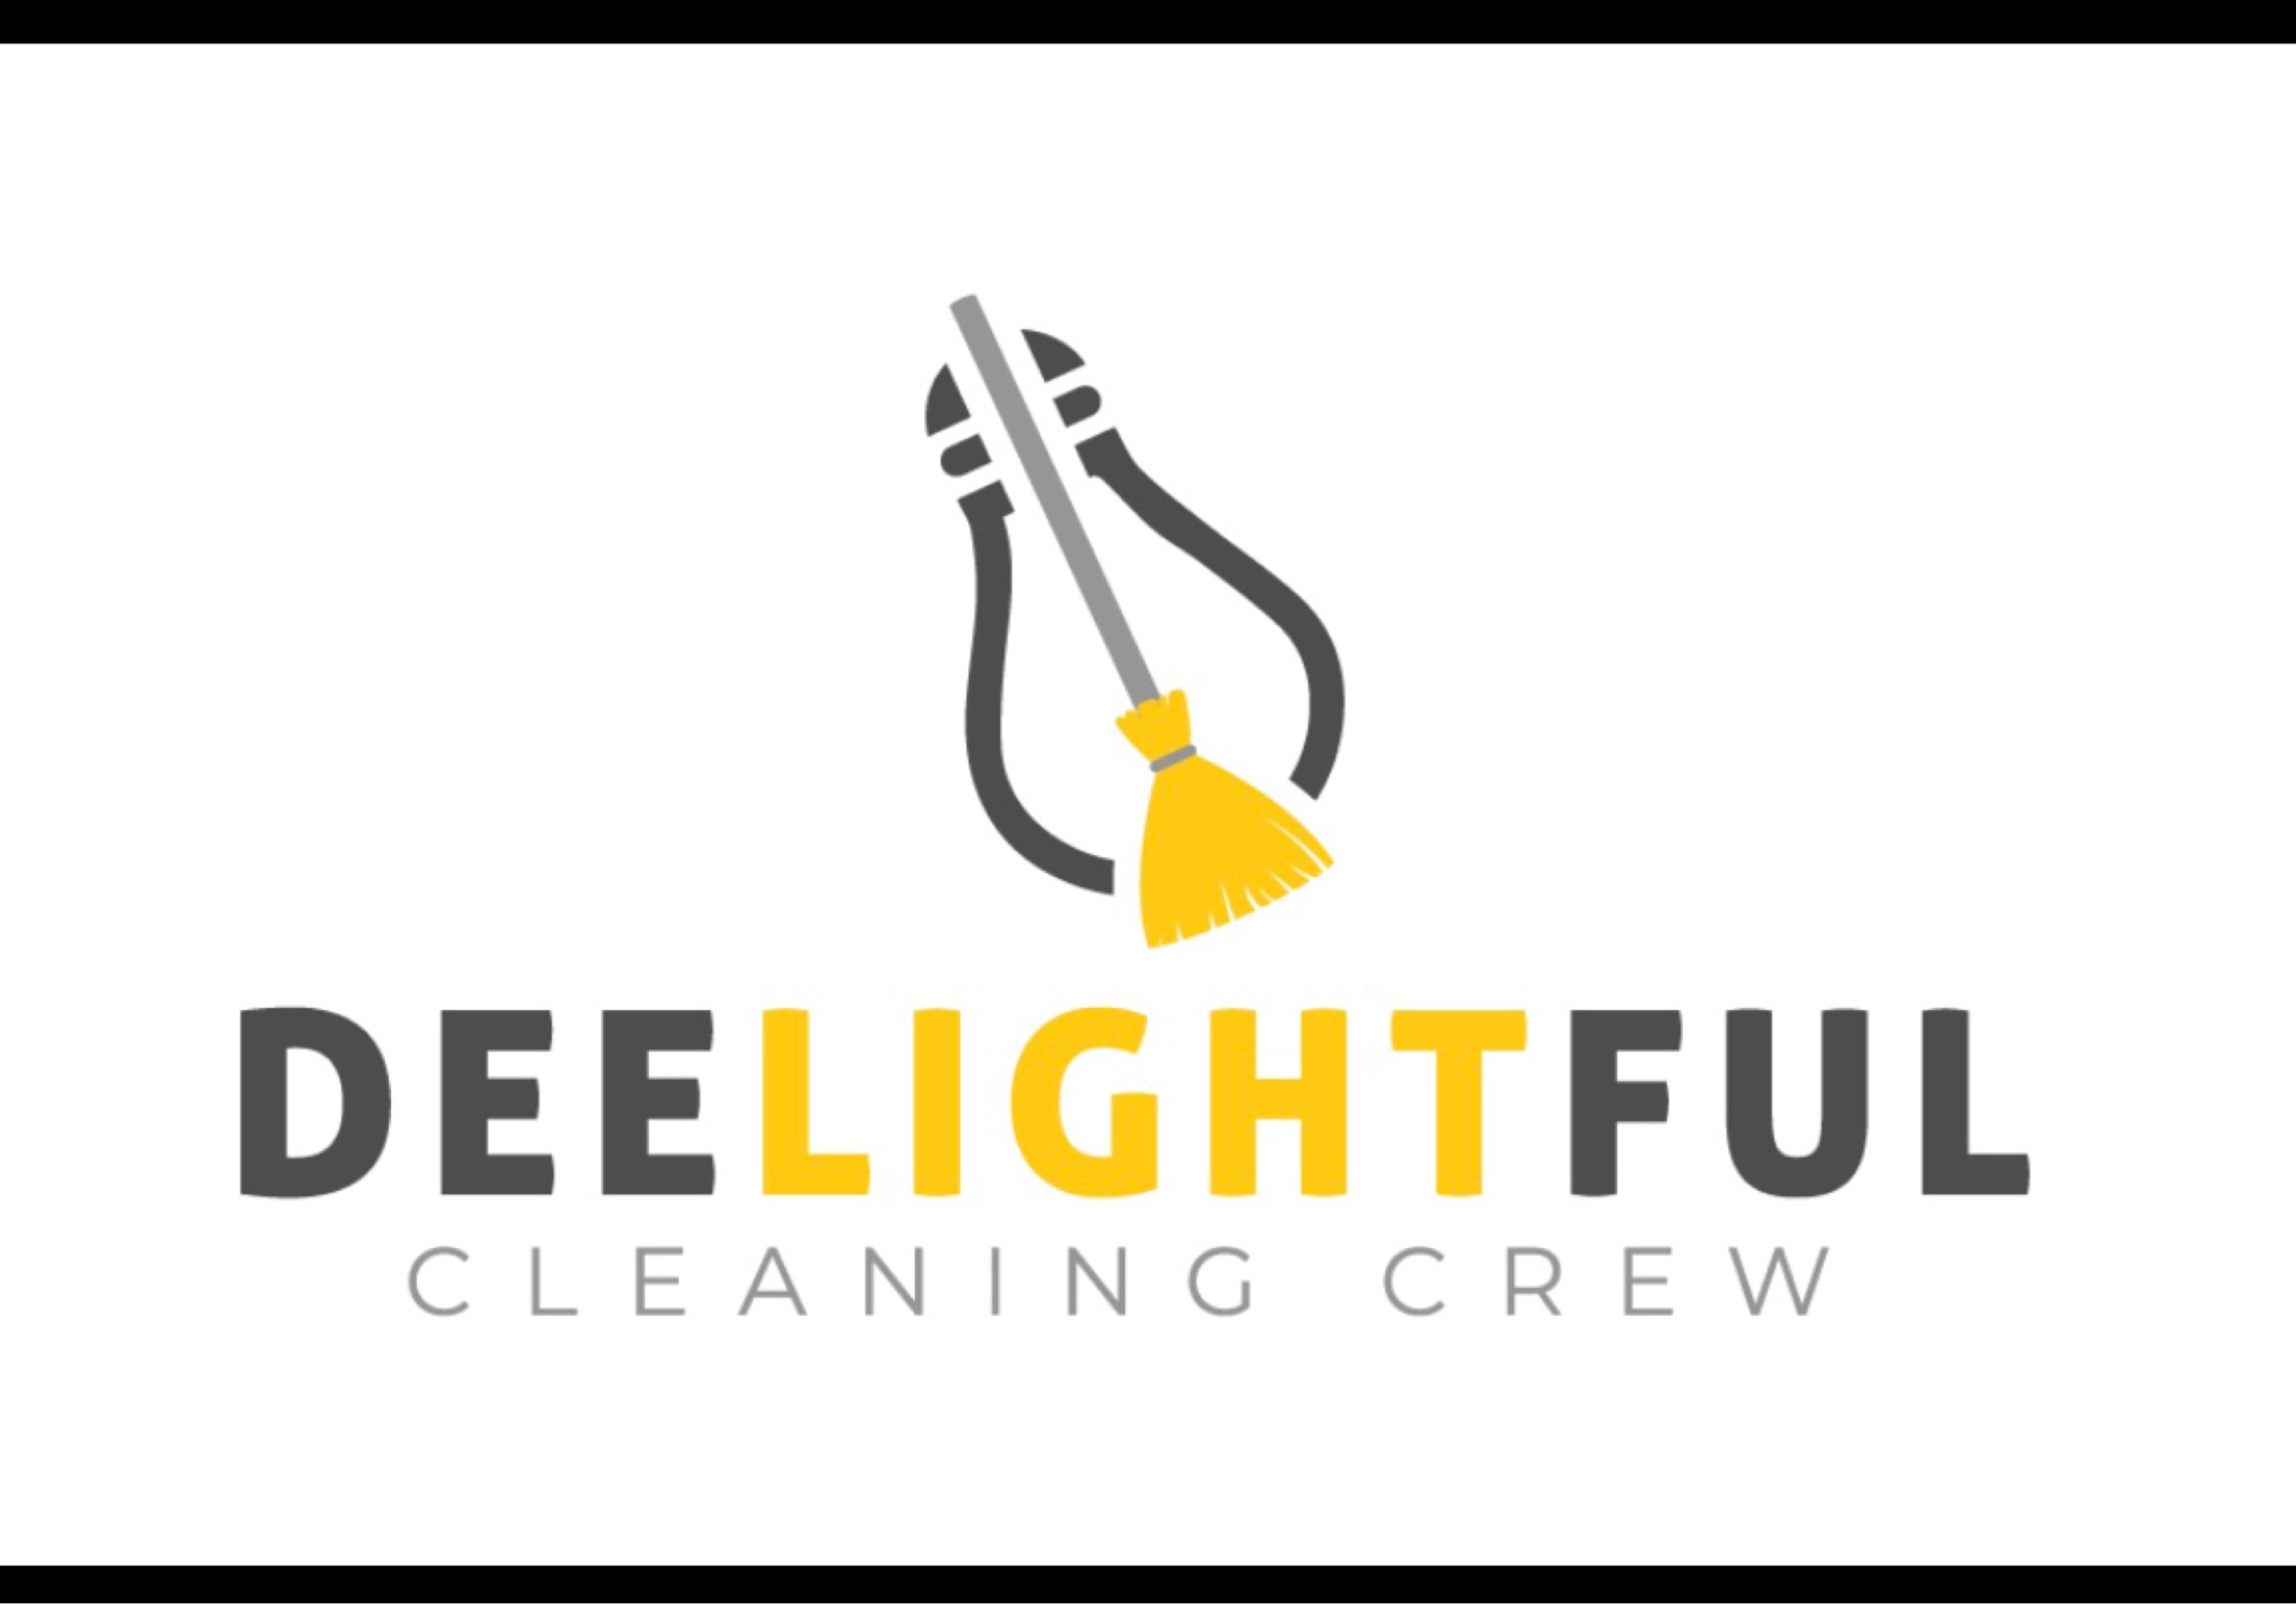 DeeLightful Cleaning Crew, LLC Logo